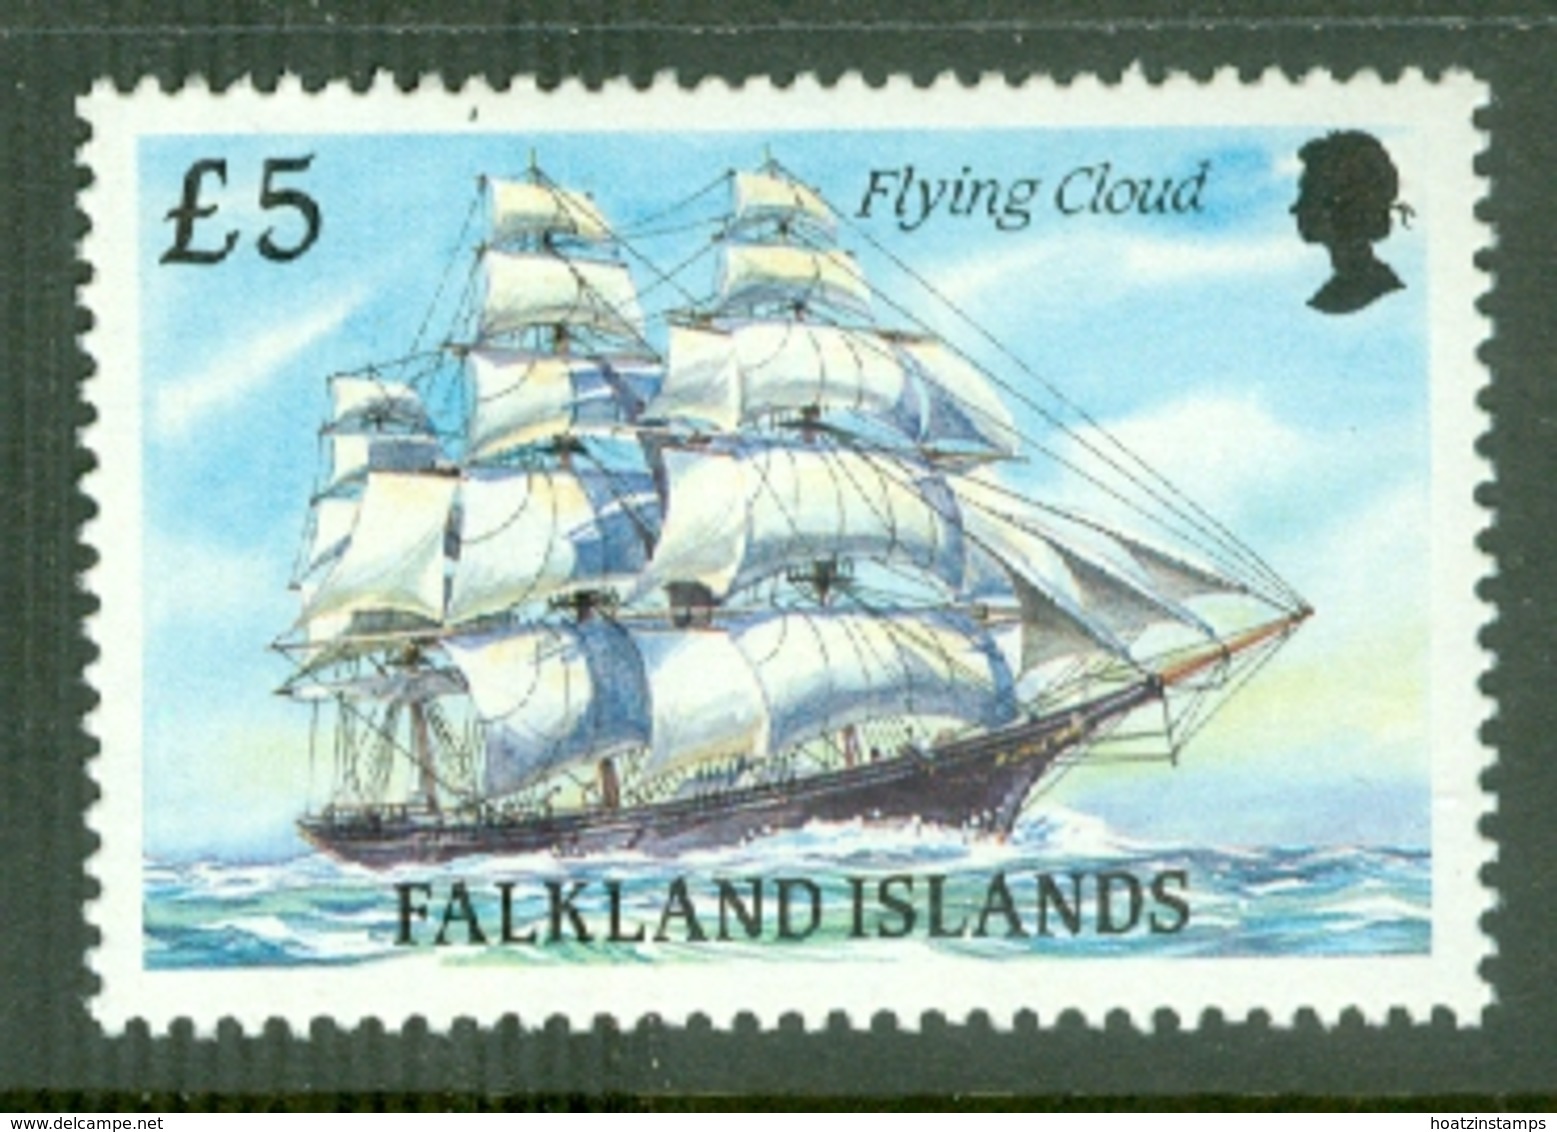 Falkland Is: 1989/90   Cape Horn Sailing Ships  SG582    £5    MNH - Falkland Islands